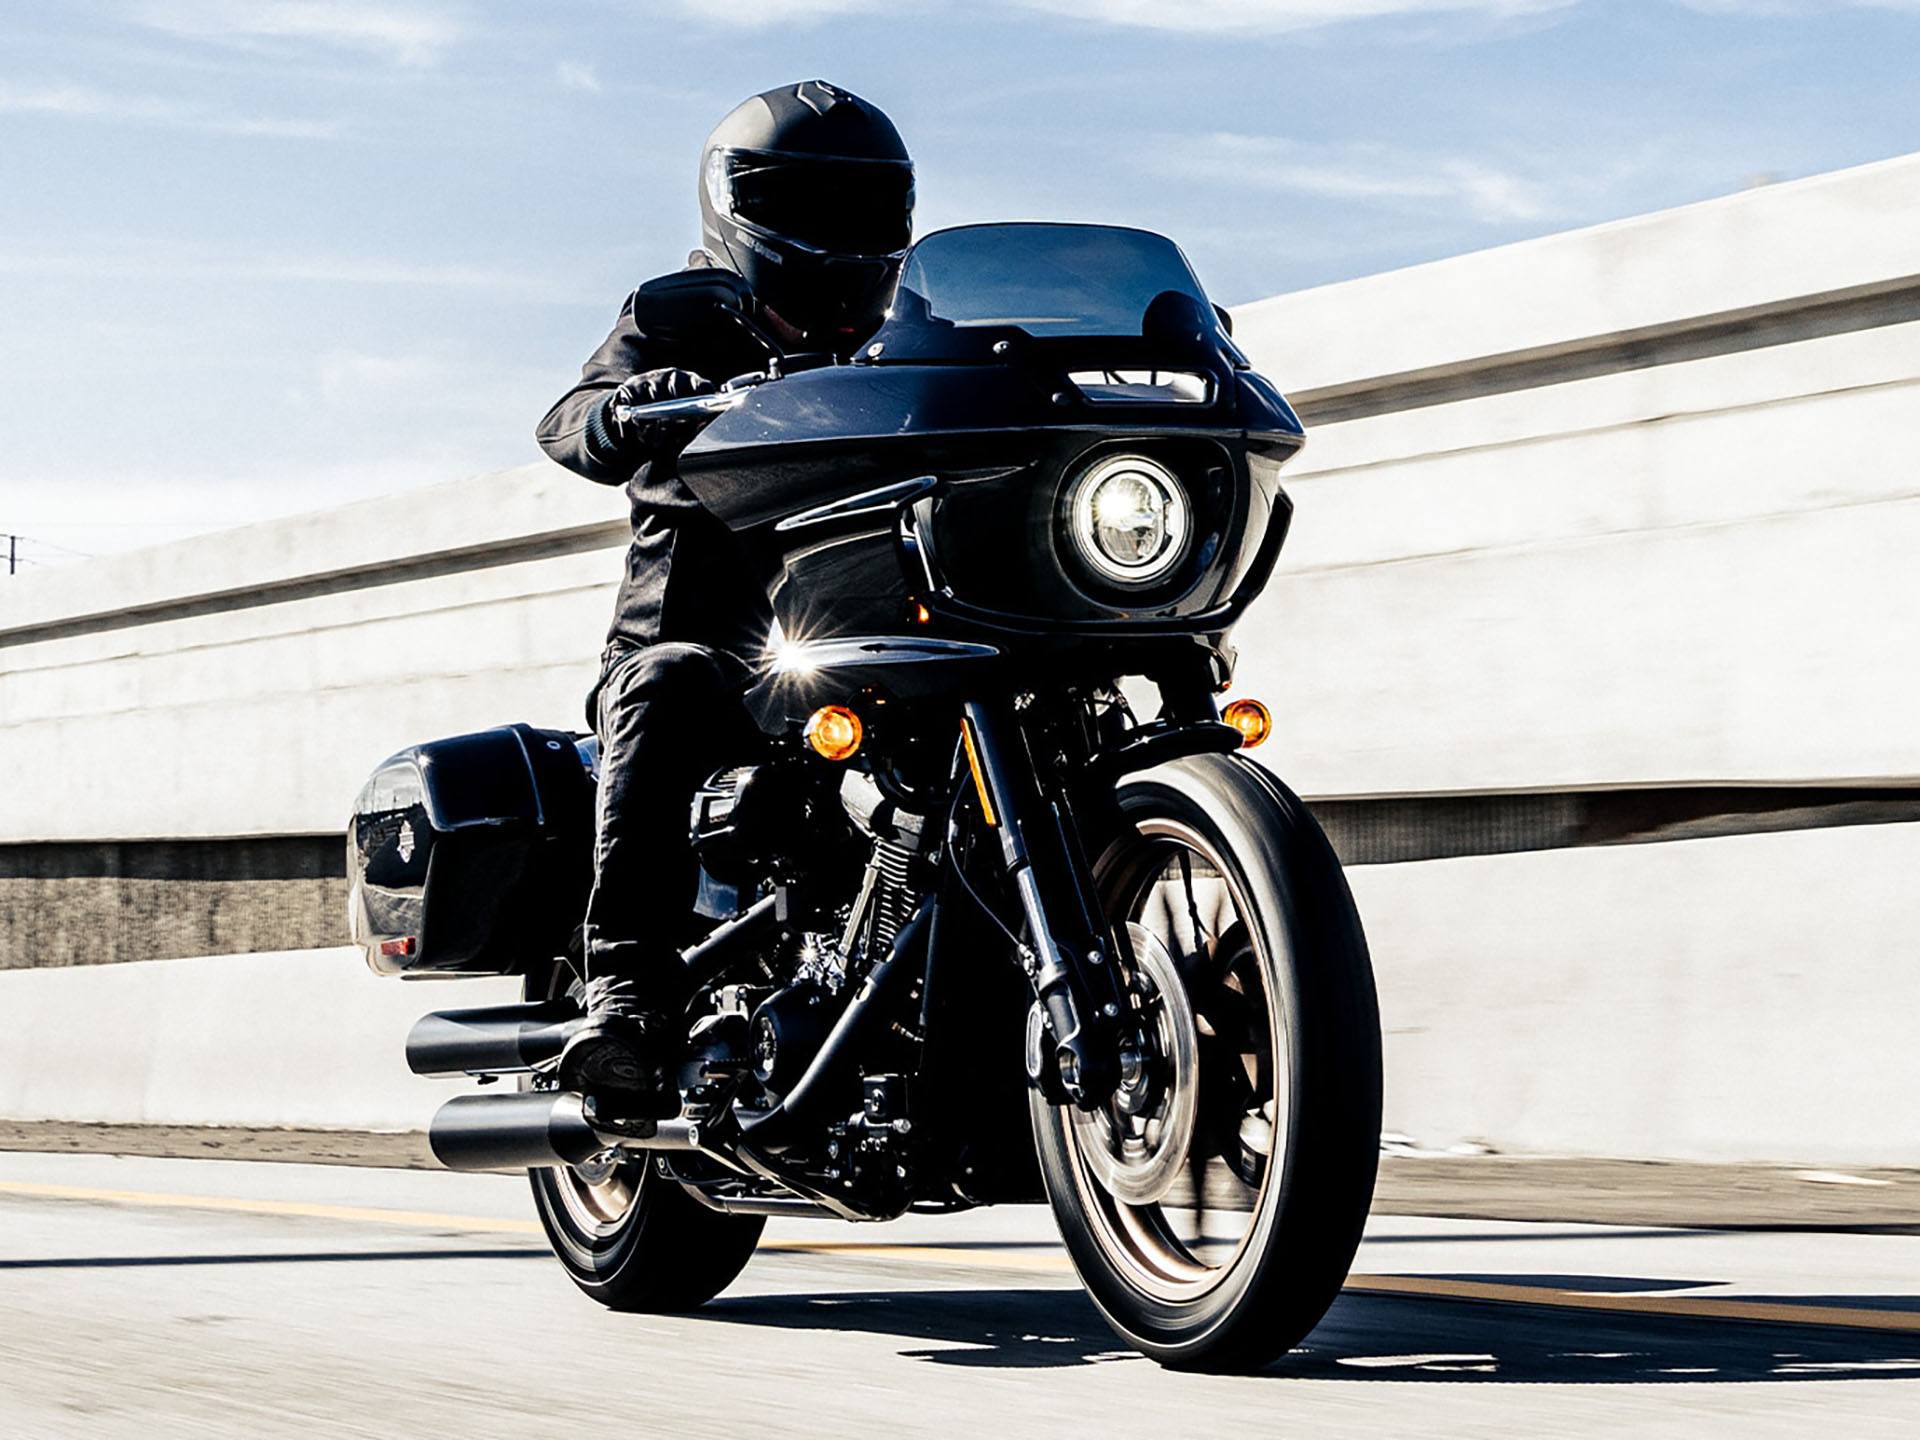 2022 Harley-Davidson Low Rider® ST in Cotati, California - Photo 3